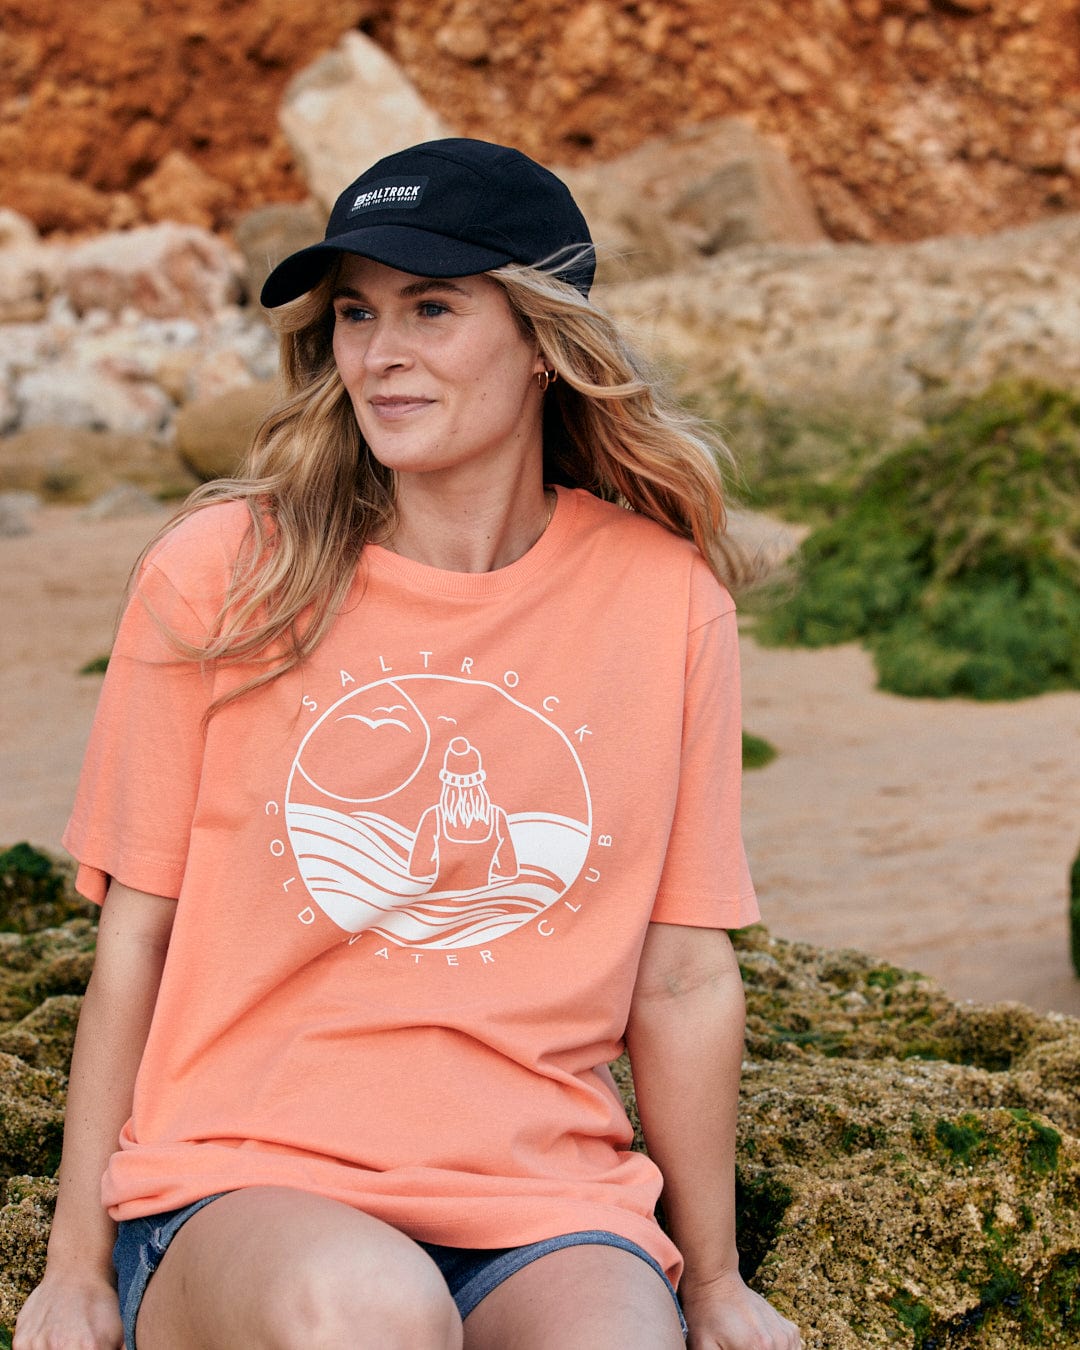 A woman wearing a Saltrock Coldwater Club - Womens Short Sleeve T-Shirt in Peach sitting on rocks.